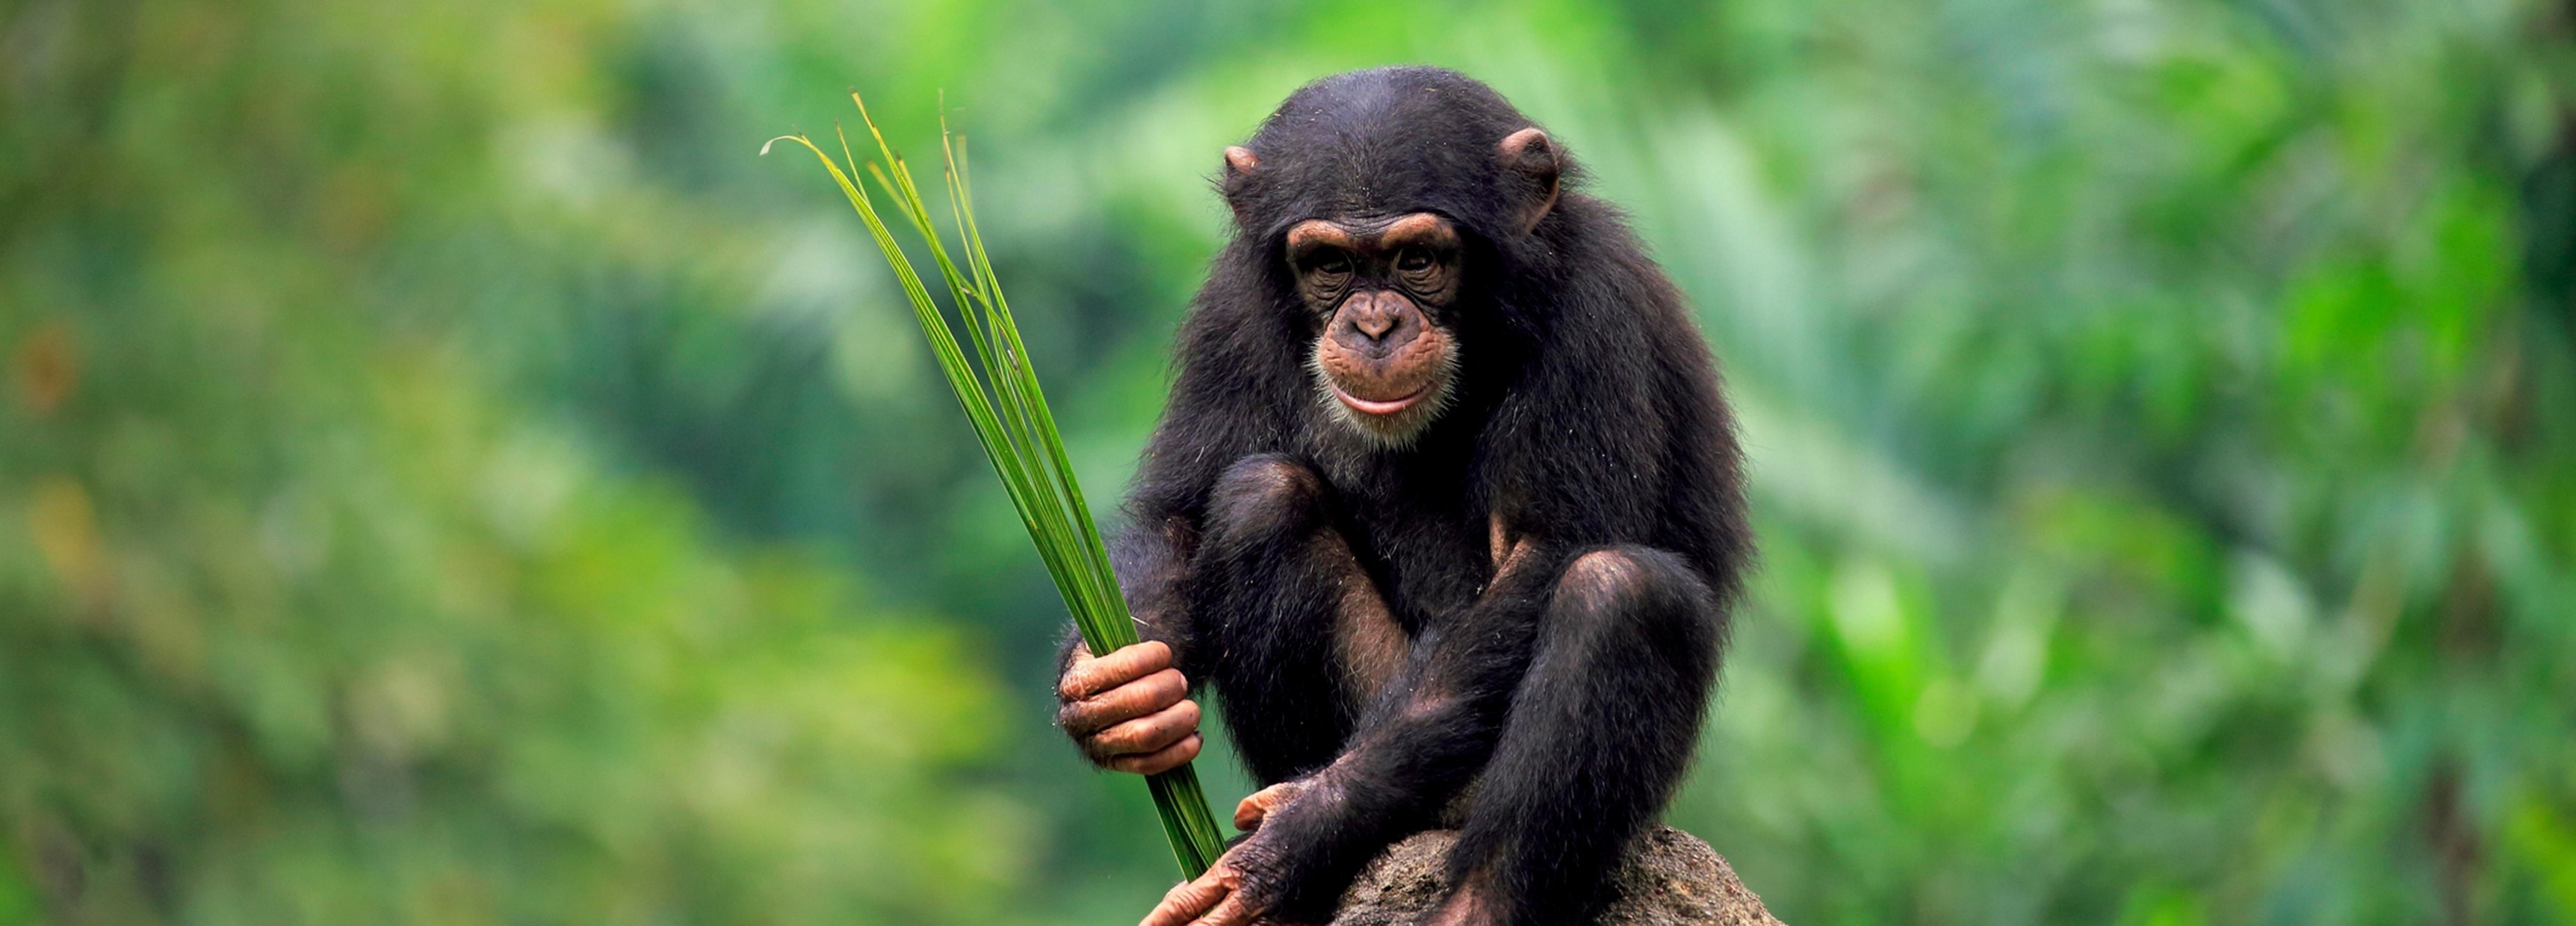 Chimpanzee's quest for honey, Extraordinary behavior, BBC Earth, 3450x1240 Dual Screen Desktop